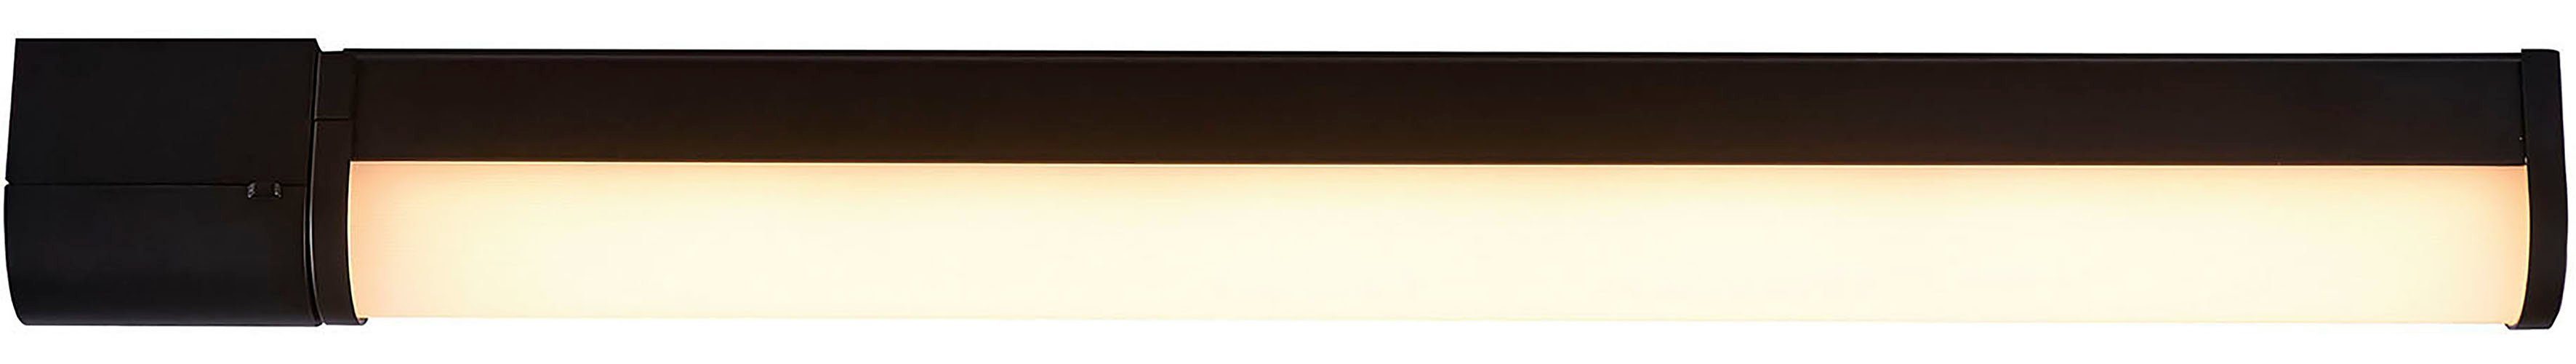 Nordlux LED Unterbauleuchte Malaika 68, LED fest integriert, Warmweiß,  20.000h Lebensdauer + 5 Jahre LED Garantie